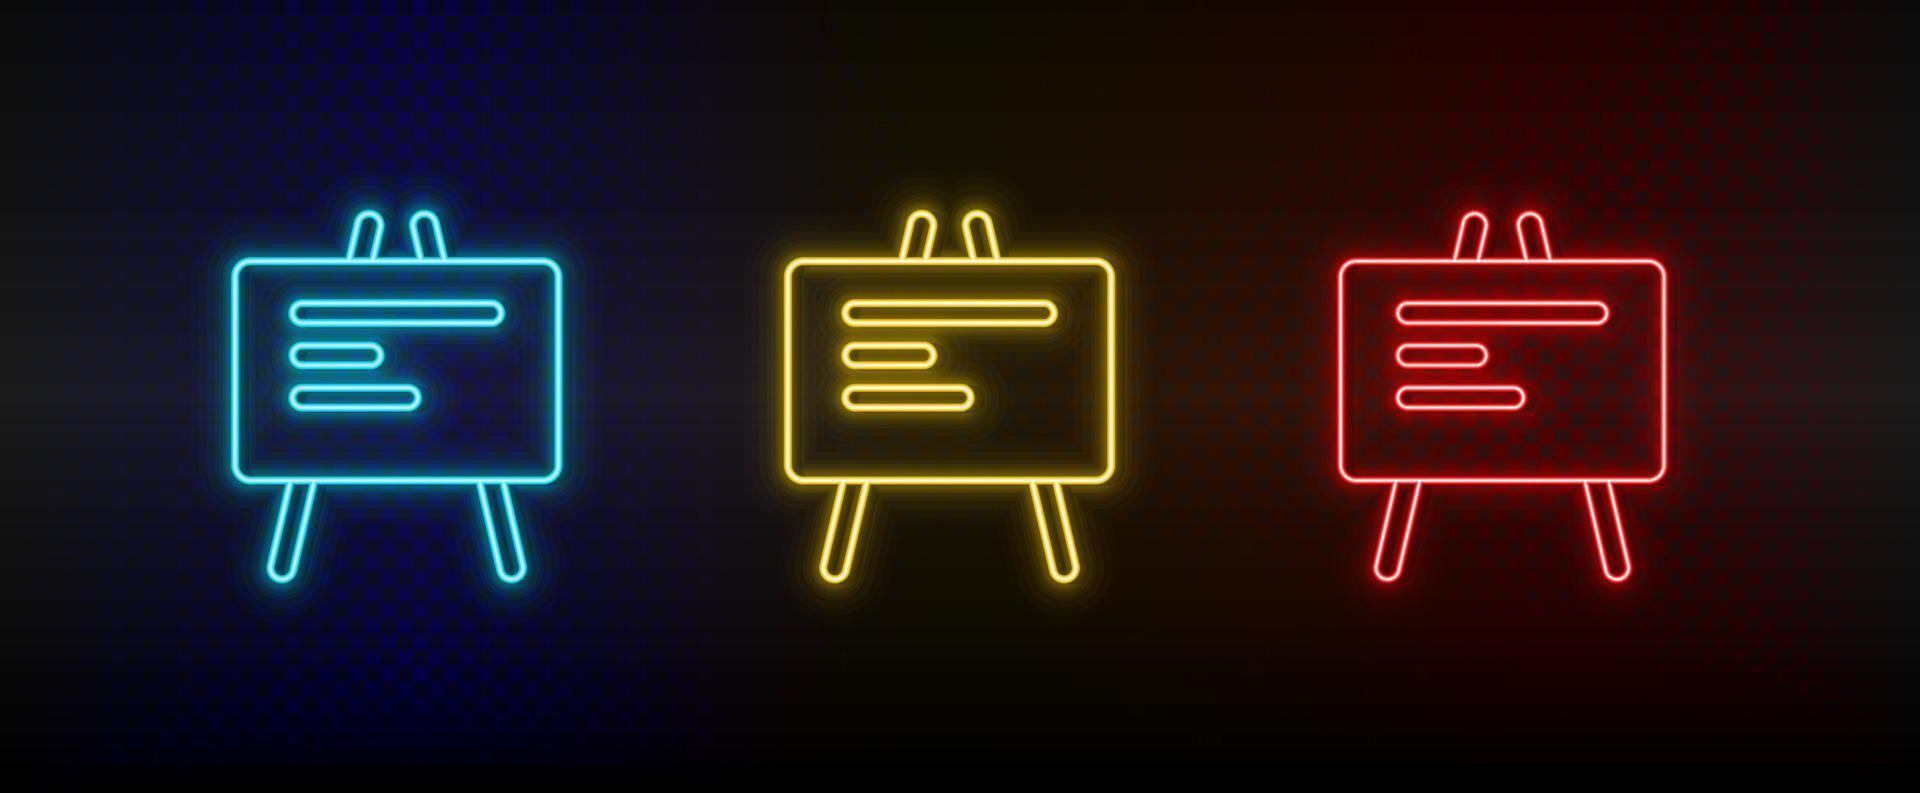 Neon icons, blackboard. Set of red, blue, yellow neon vector icon on darken transparent background